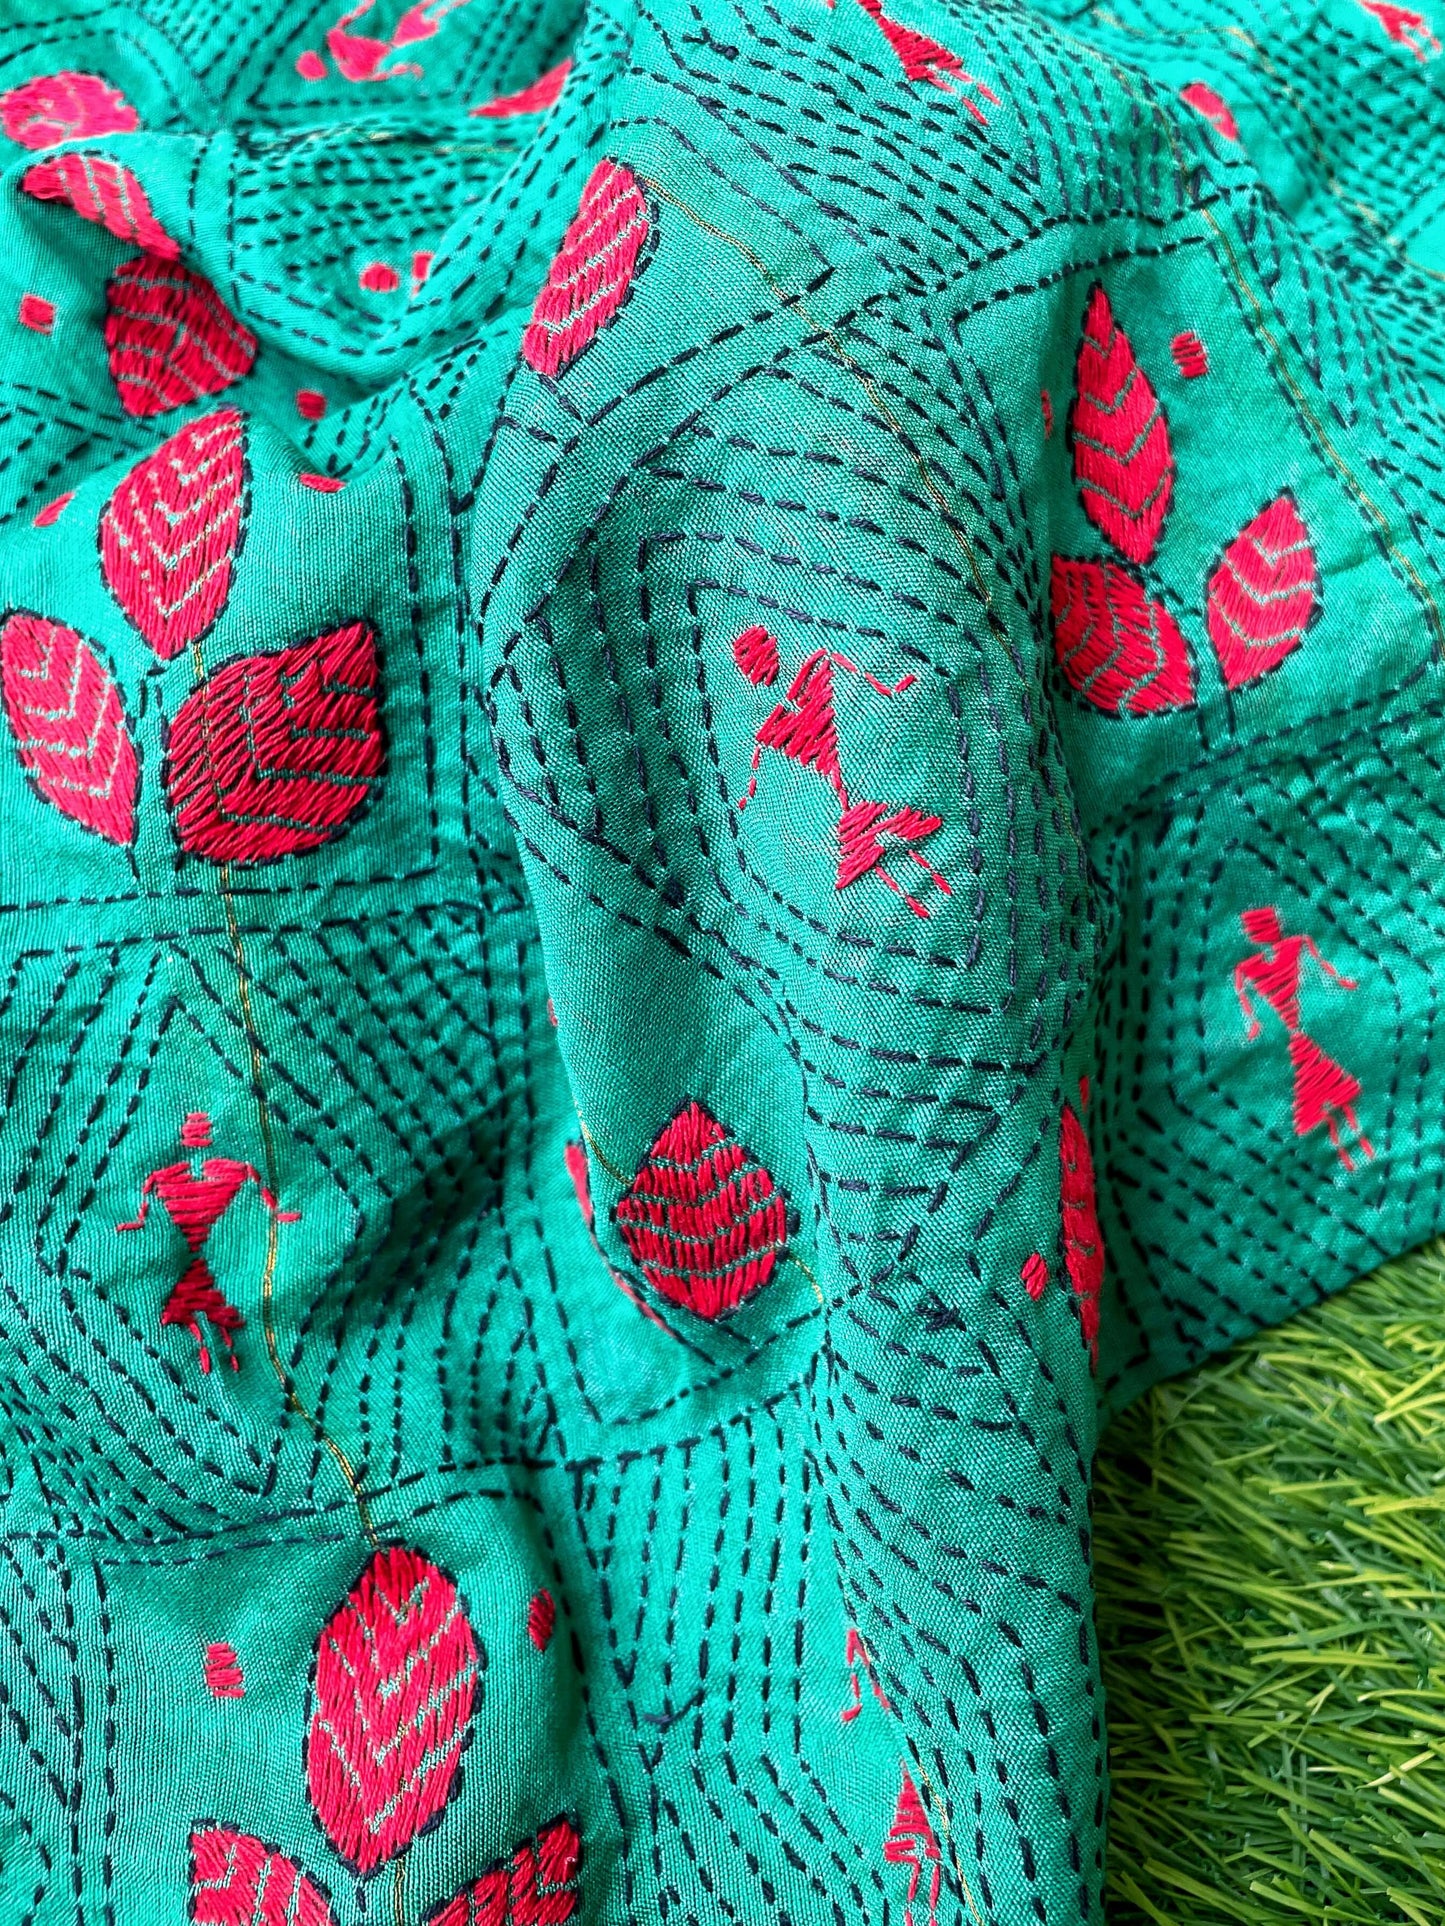 Green Chanderi kantha blouse fabric